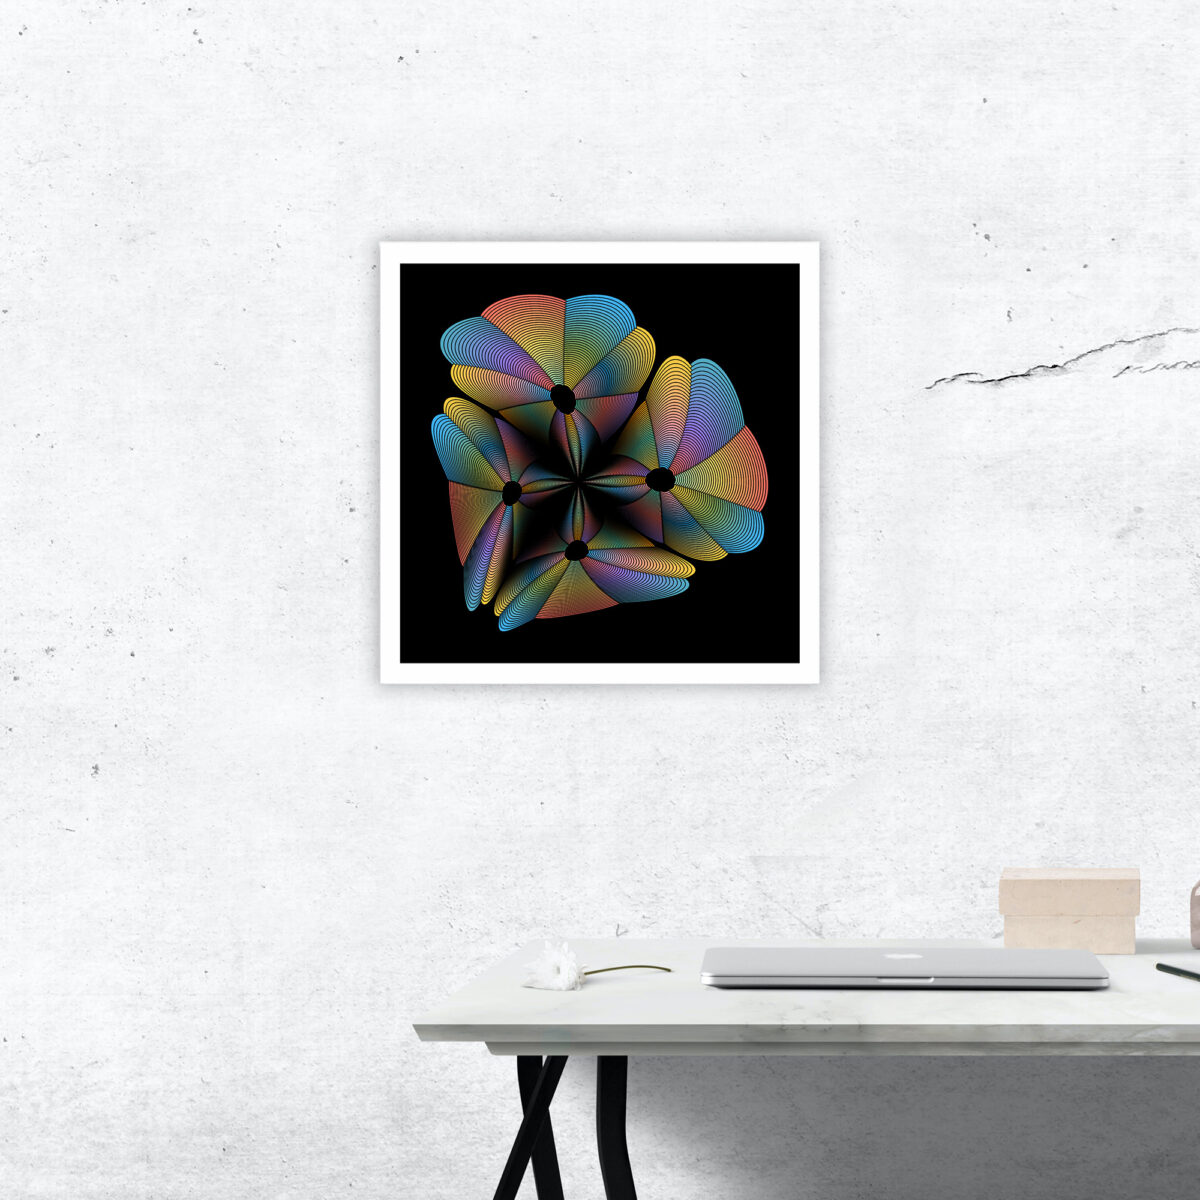 White framed Big Bang art print hanging on a wall